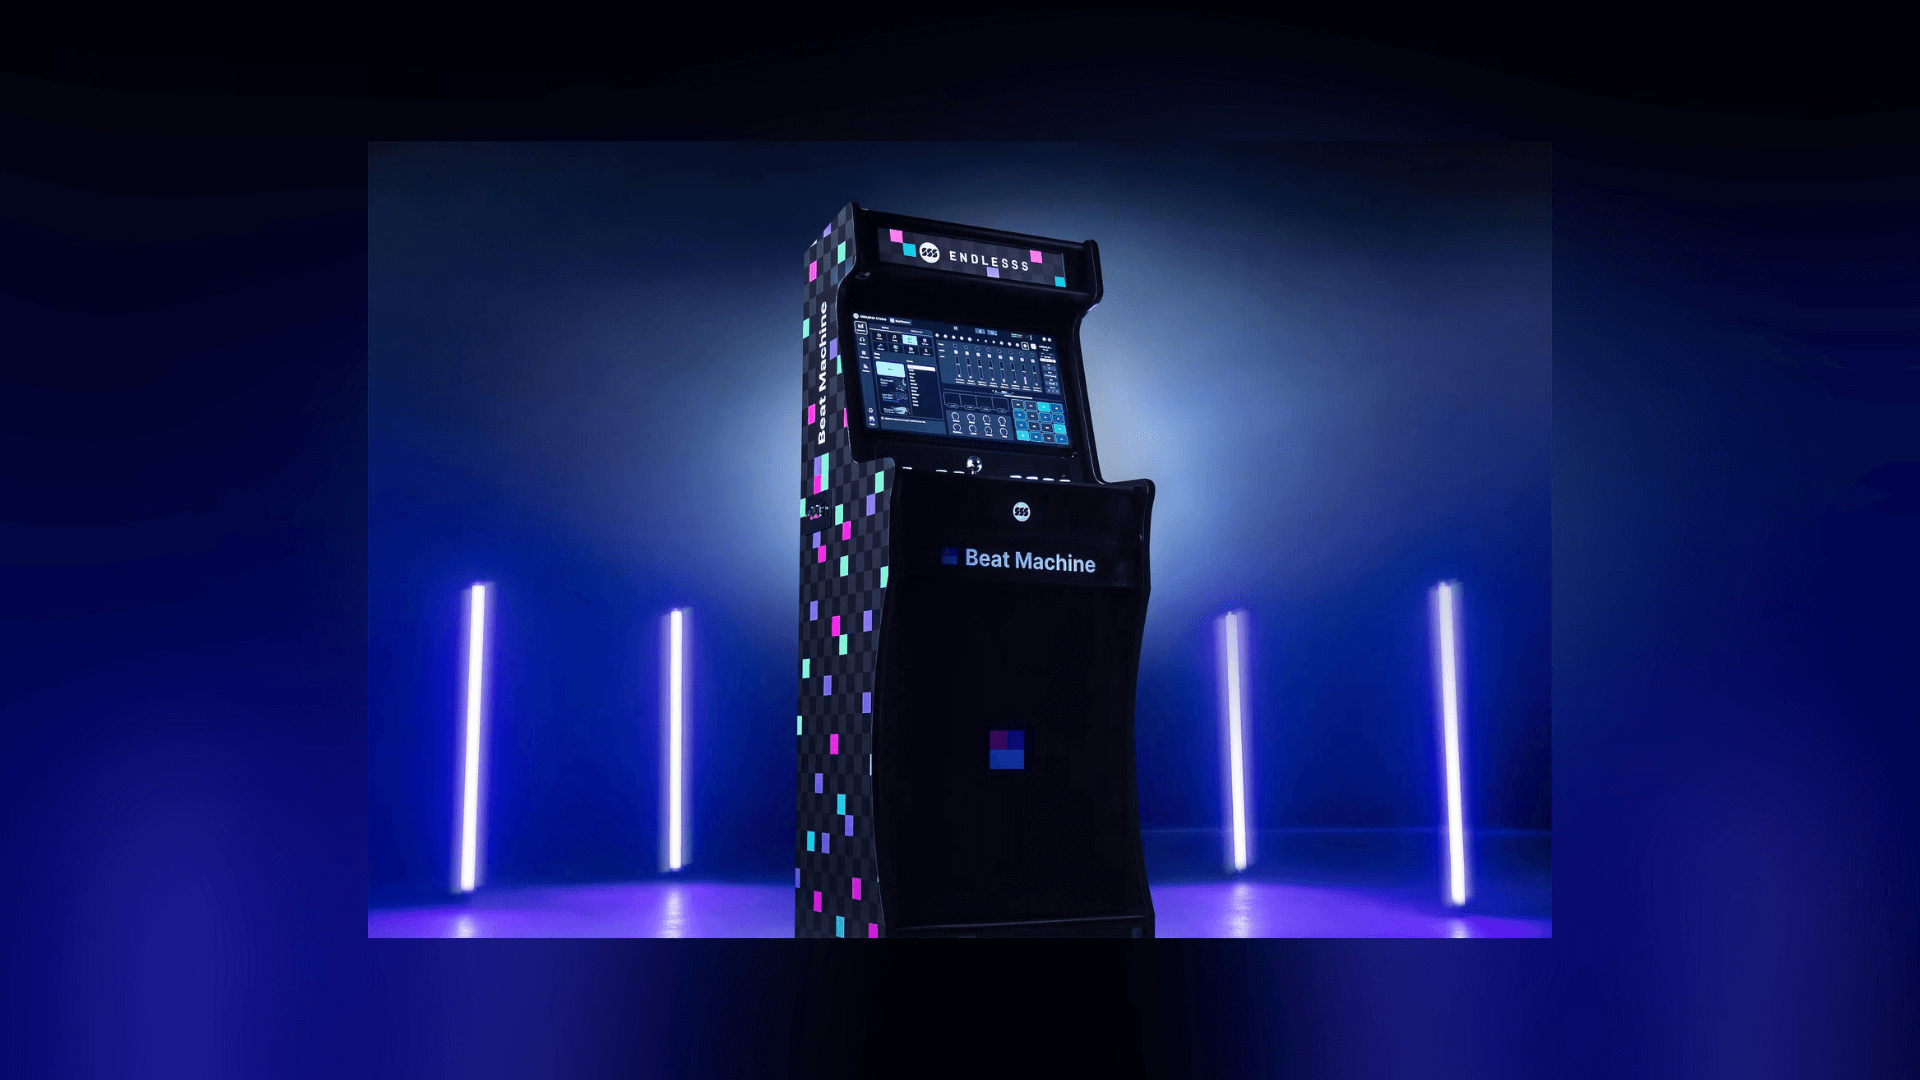 Beat Machine combines arcade games and music-making